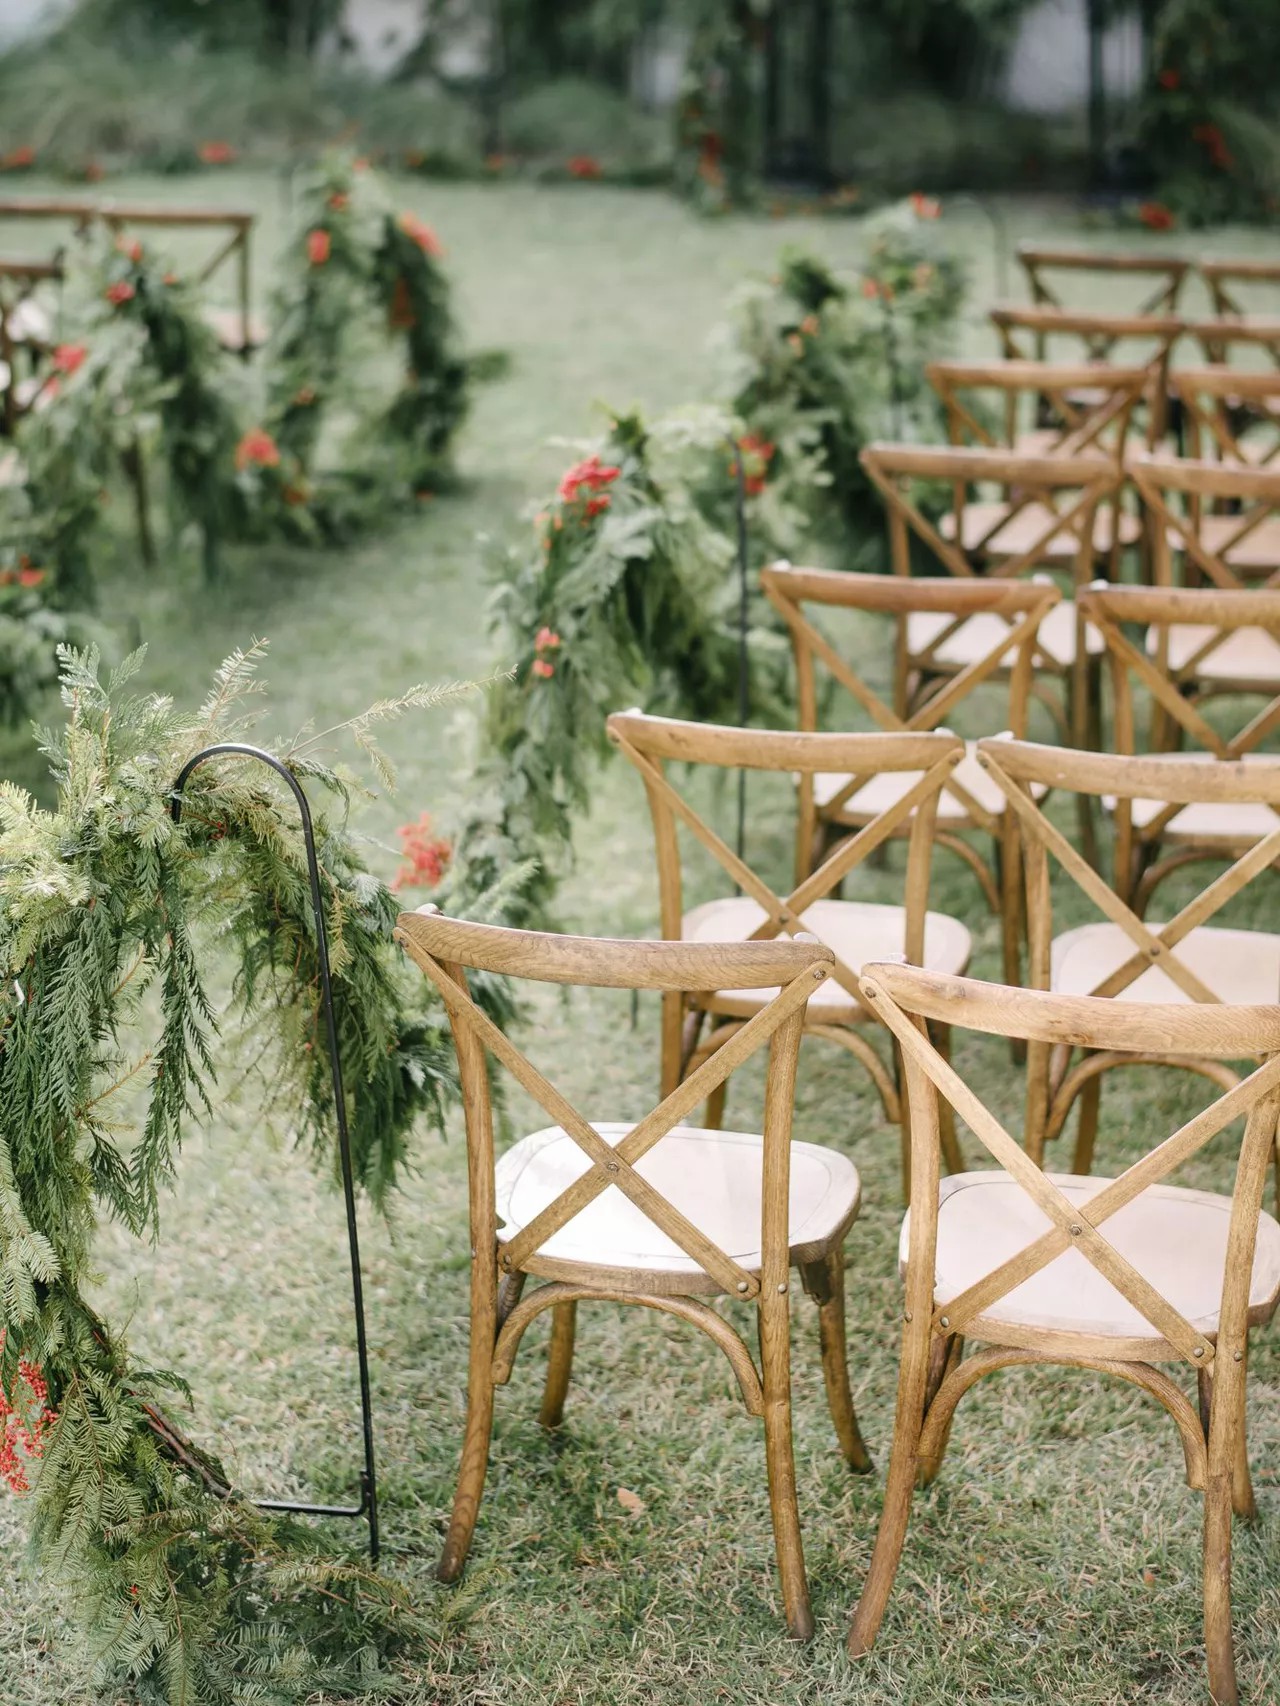 21 Romantic Wedding Aisle Decorations Ideas To Completely Transform Your Wedding Venue